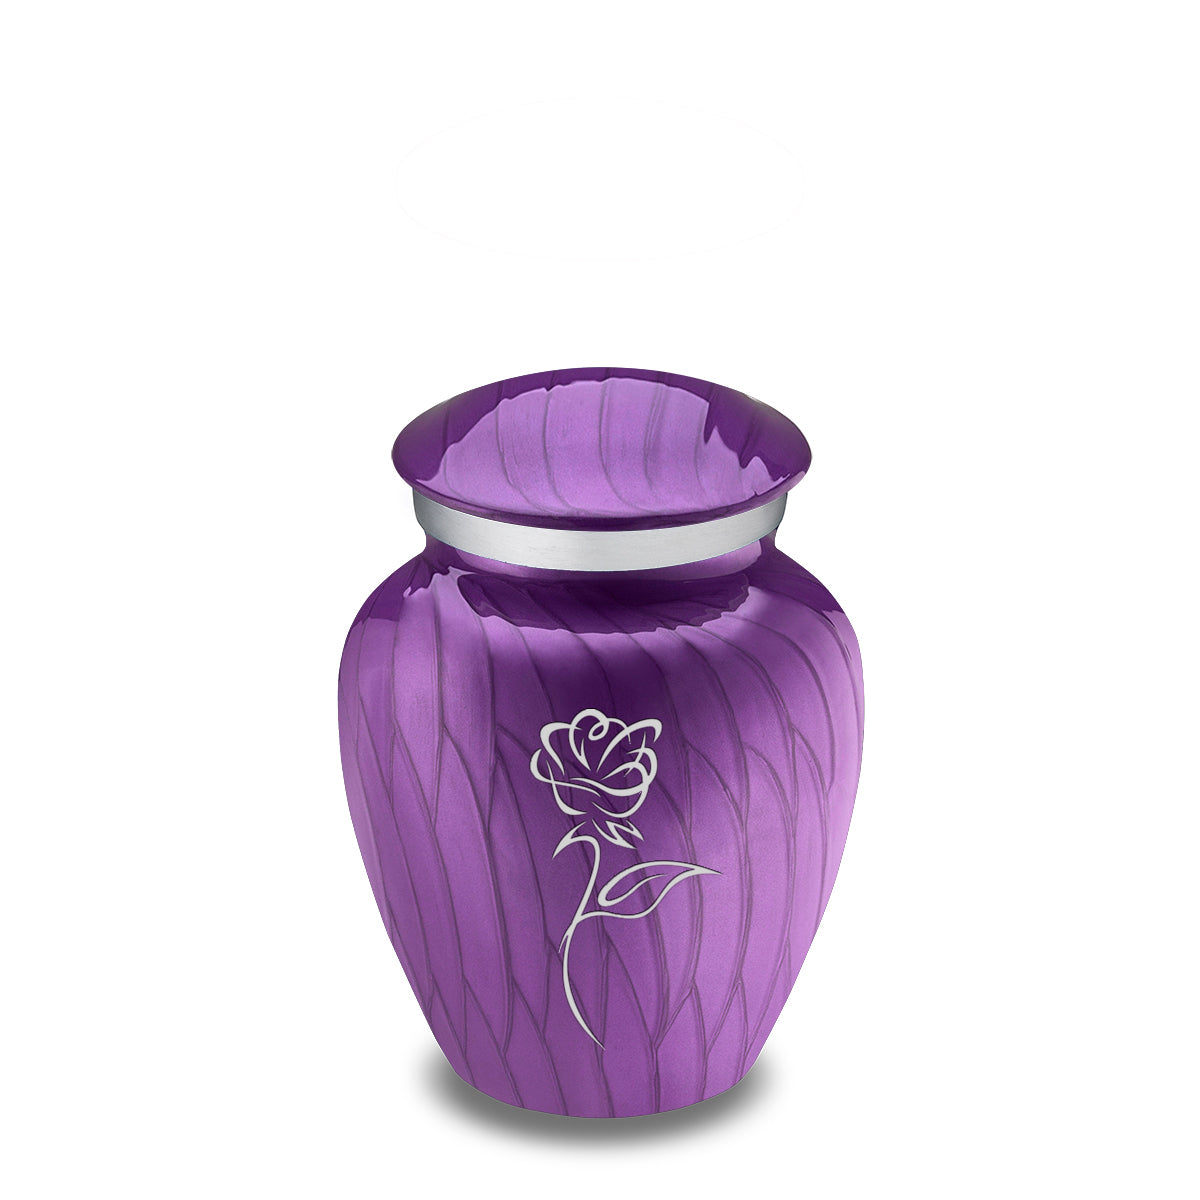 Keepsake Embrace Pearl Purple Rose Cremation Urn